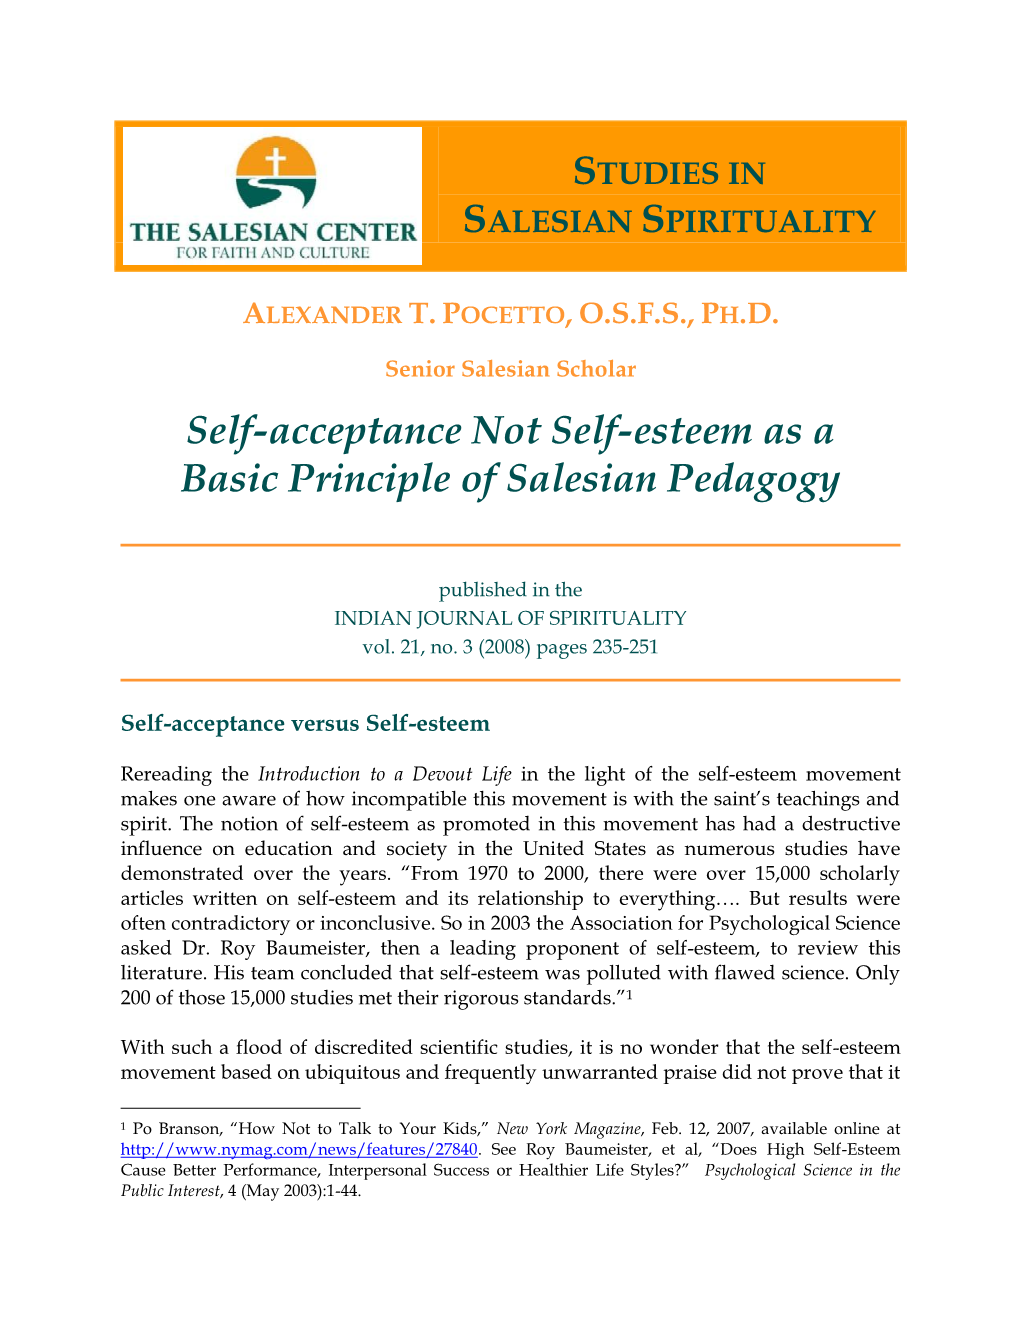 Self-Acceptance Not Self-Esteem As a Basic Principle of Salesian Pedagogy